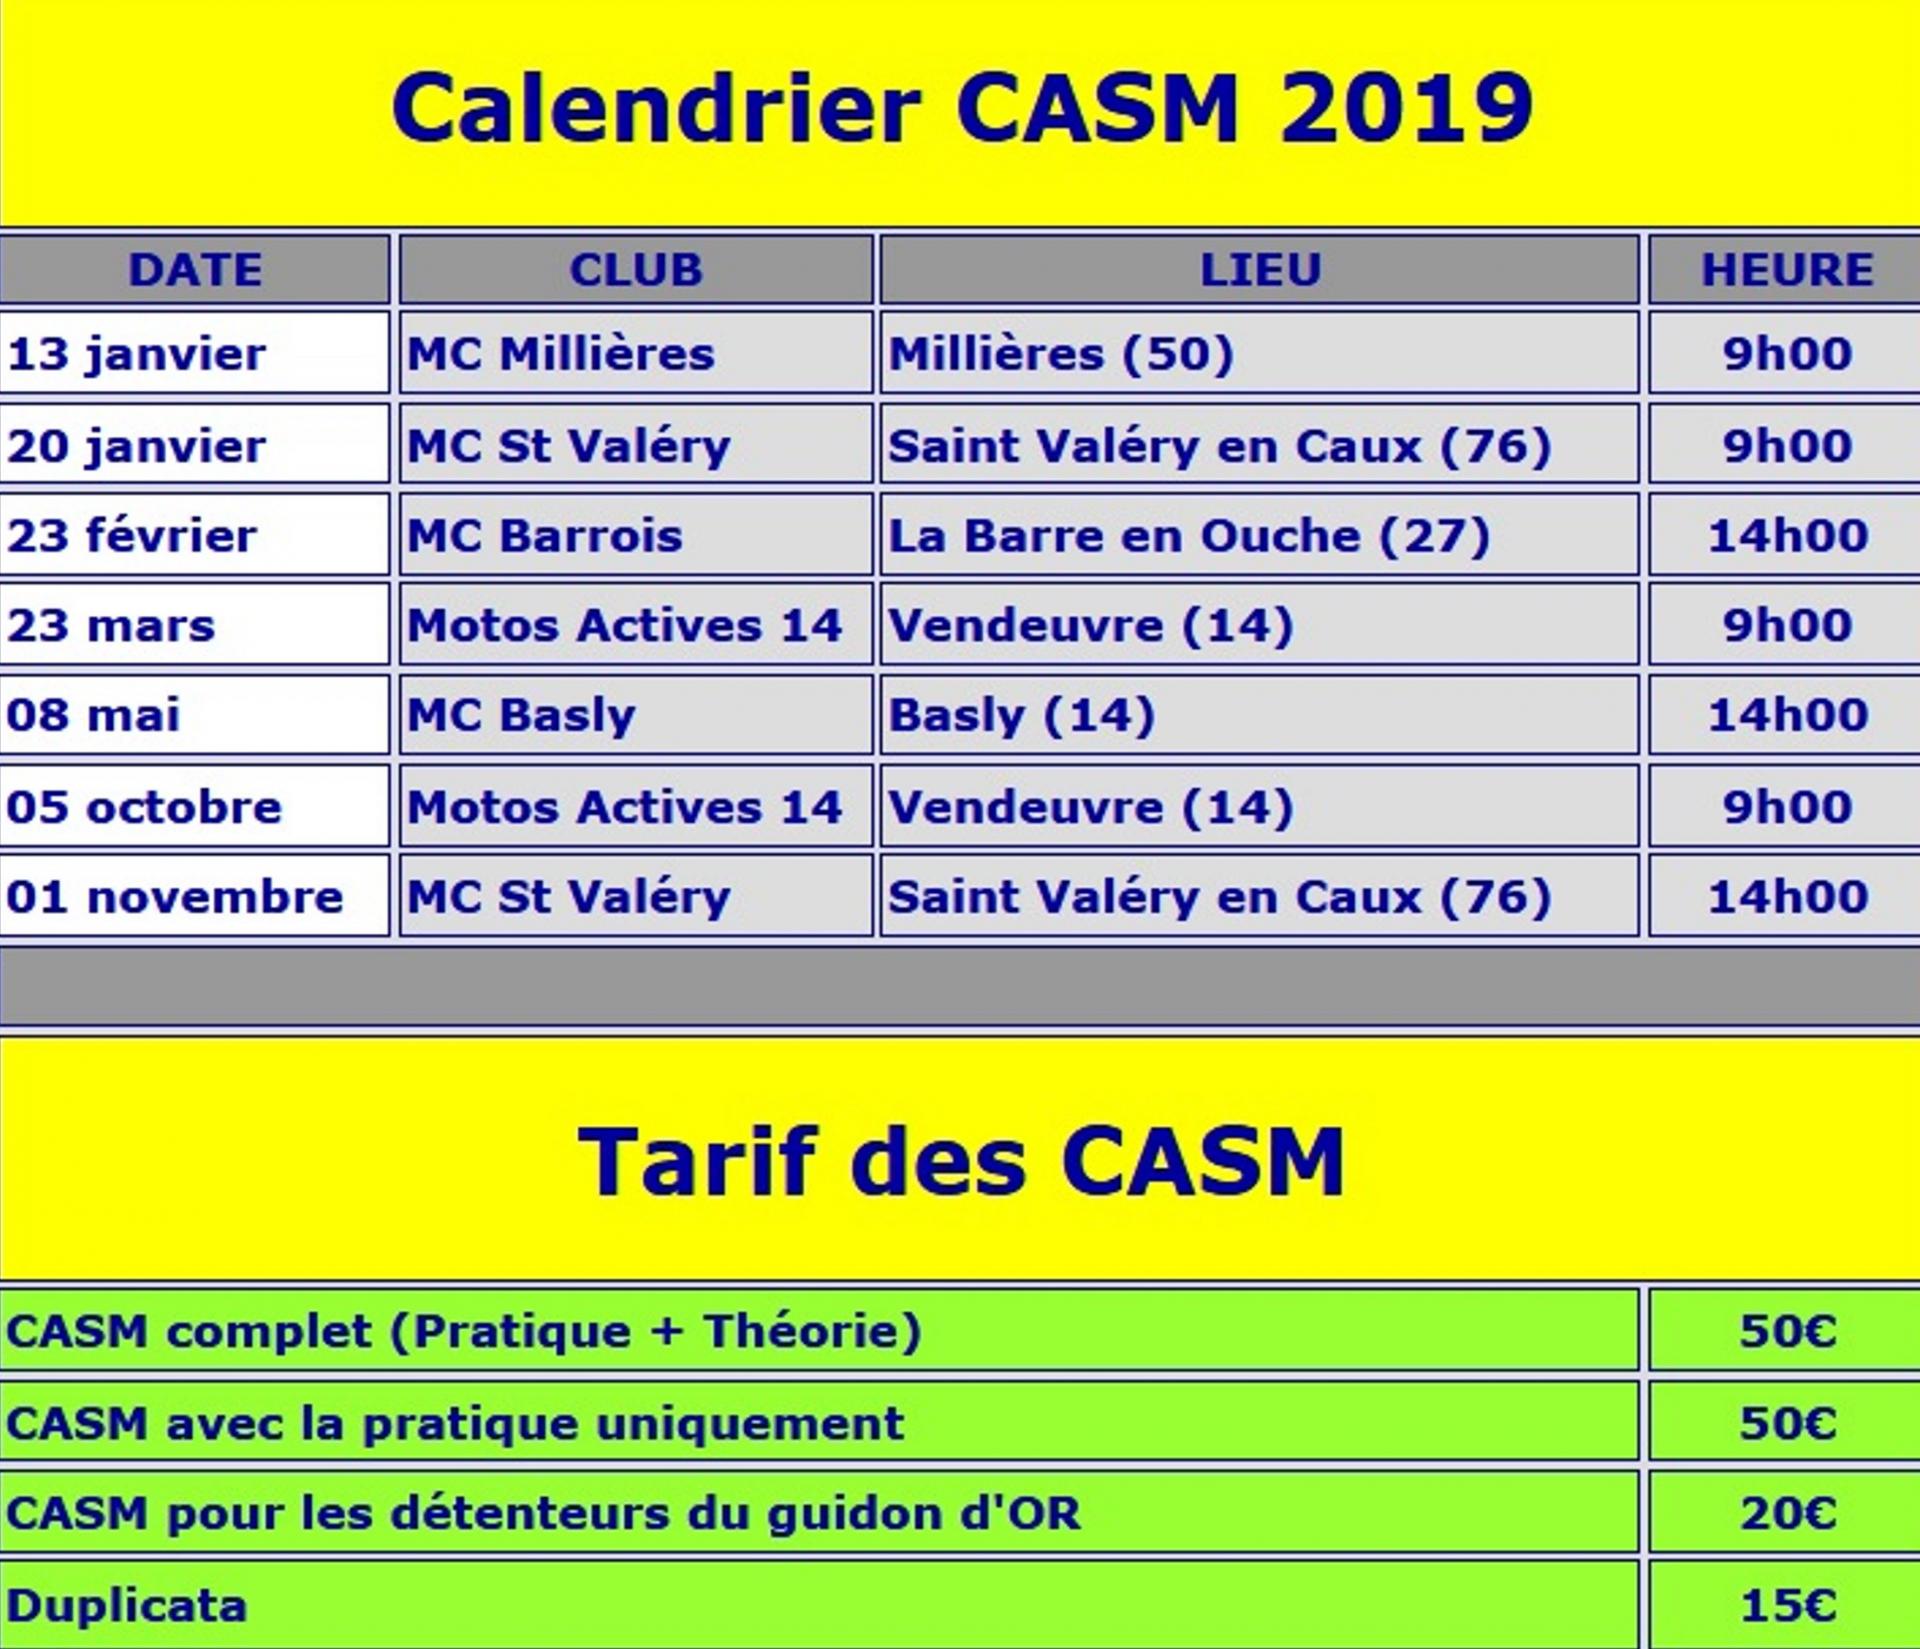 Calendrier CASM 2019 Normandie